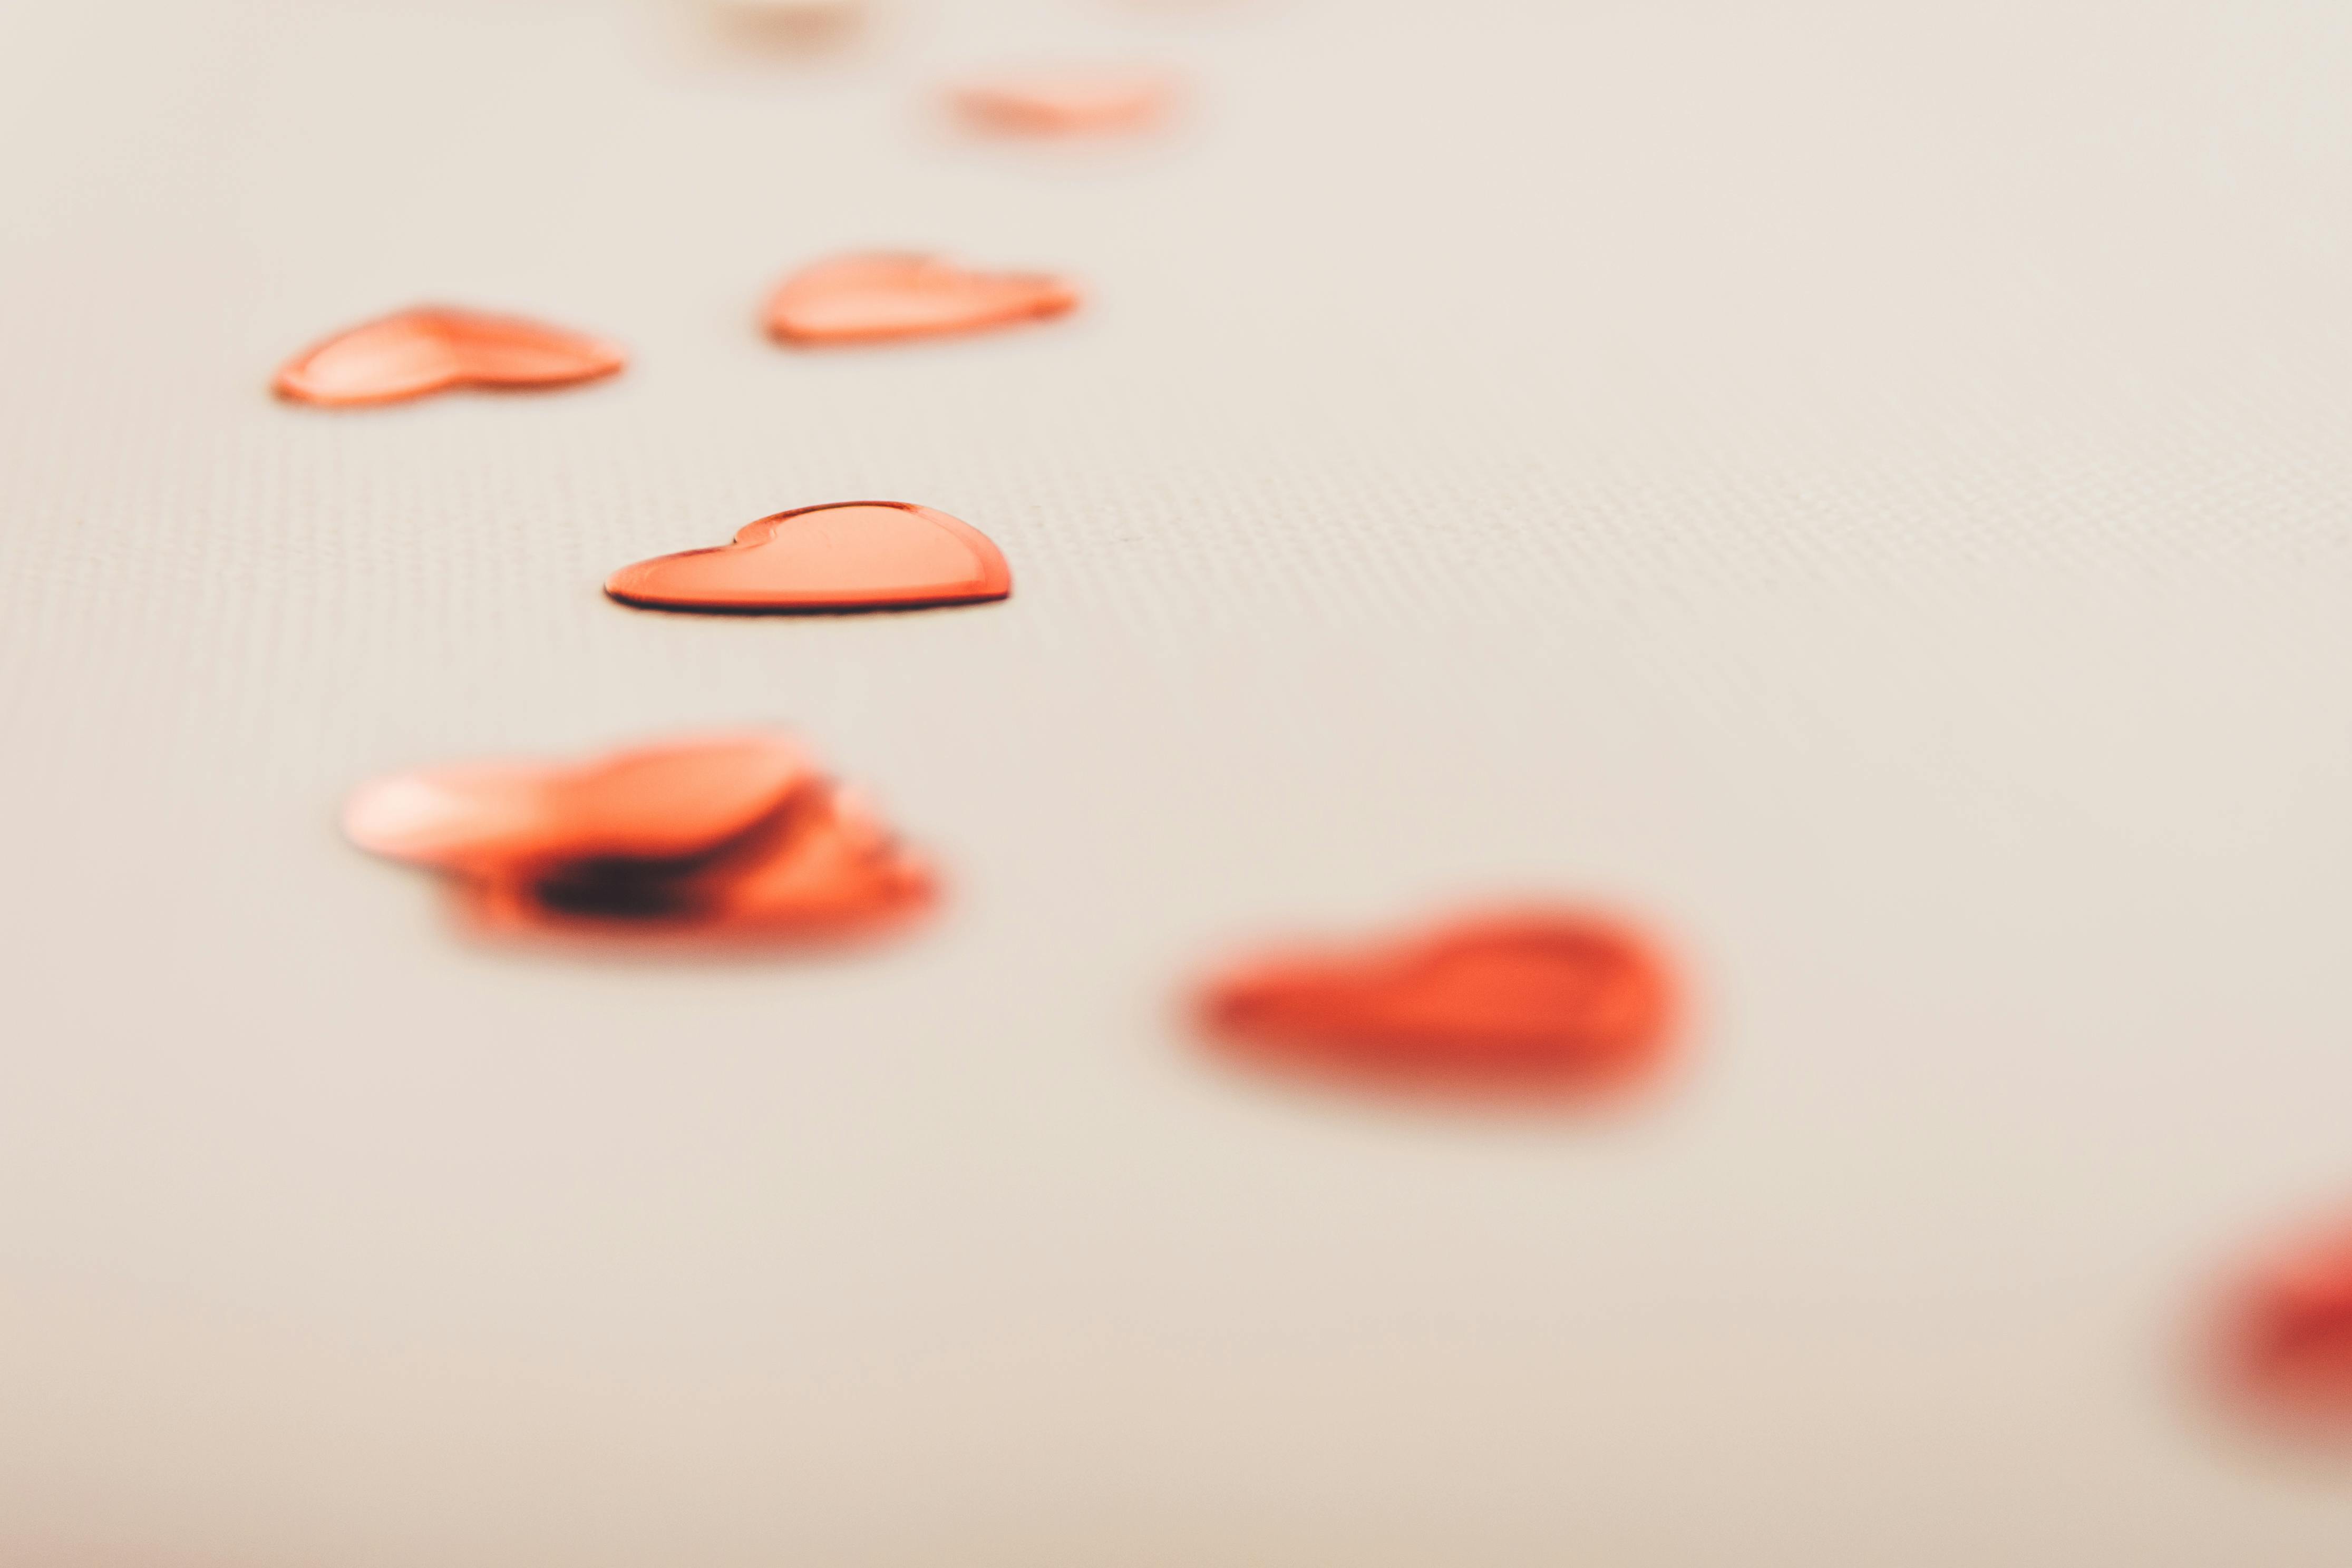 Mini Red Hearts Wallpaper · Free Stock Photo